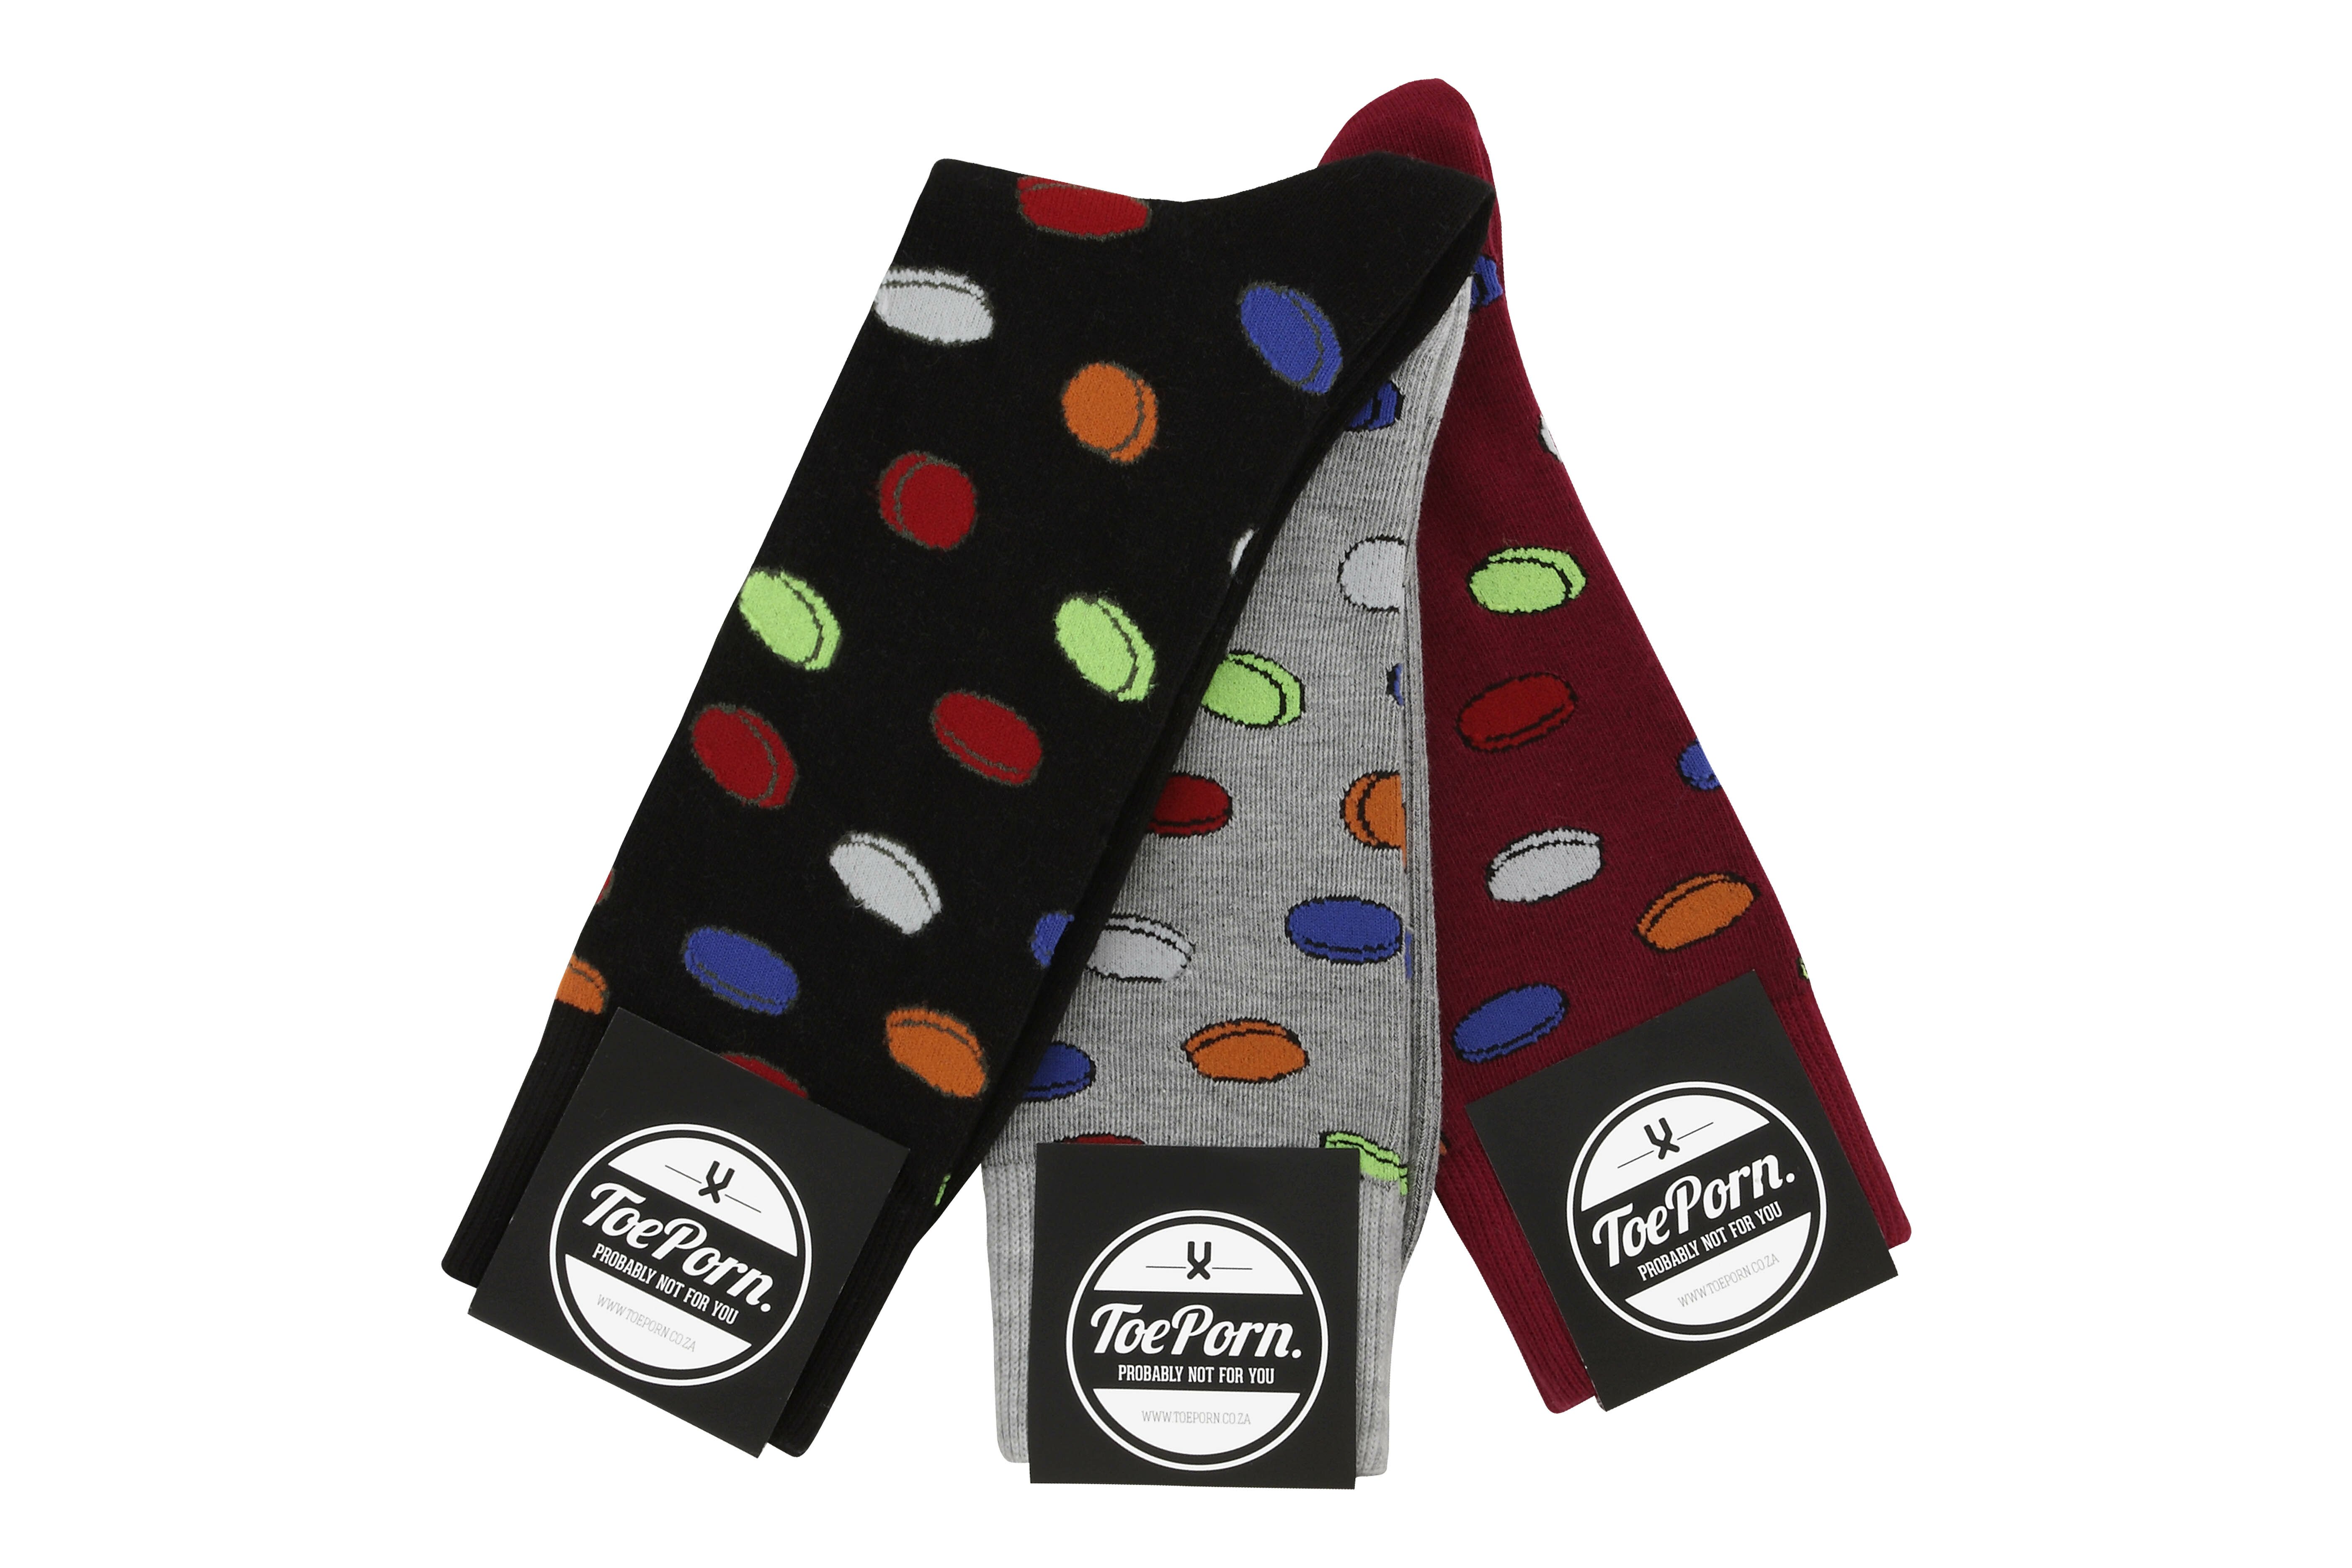 Tanner Macaroon ToePorn socks available in Black, Light Grey Melange and Maroon, R90 each